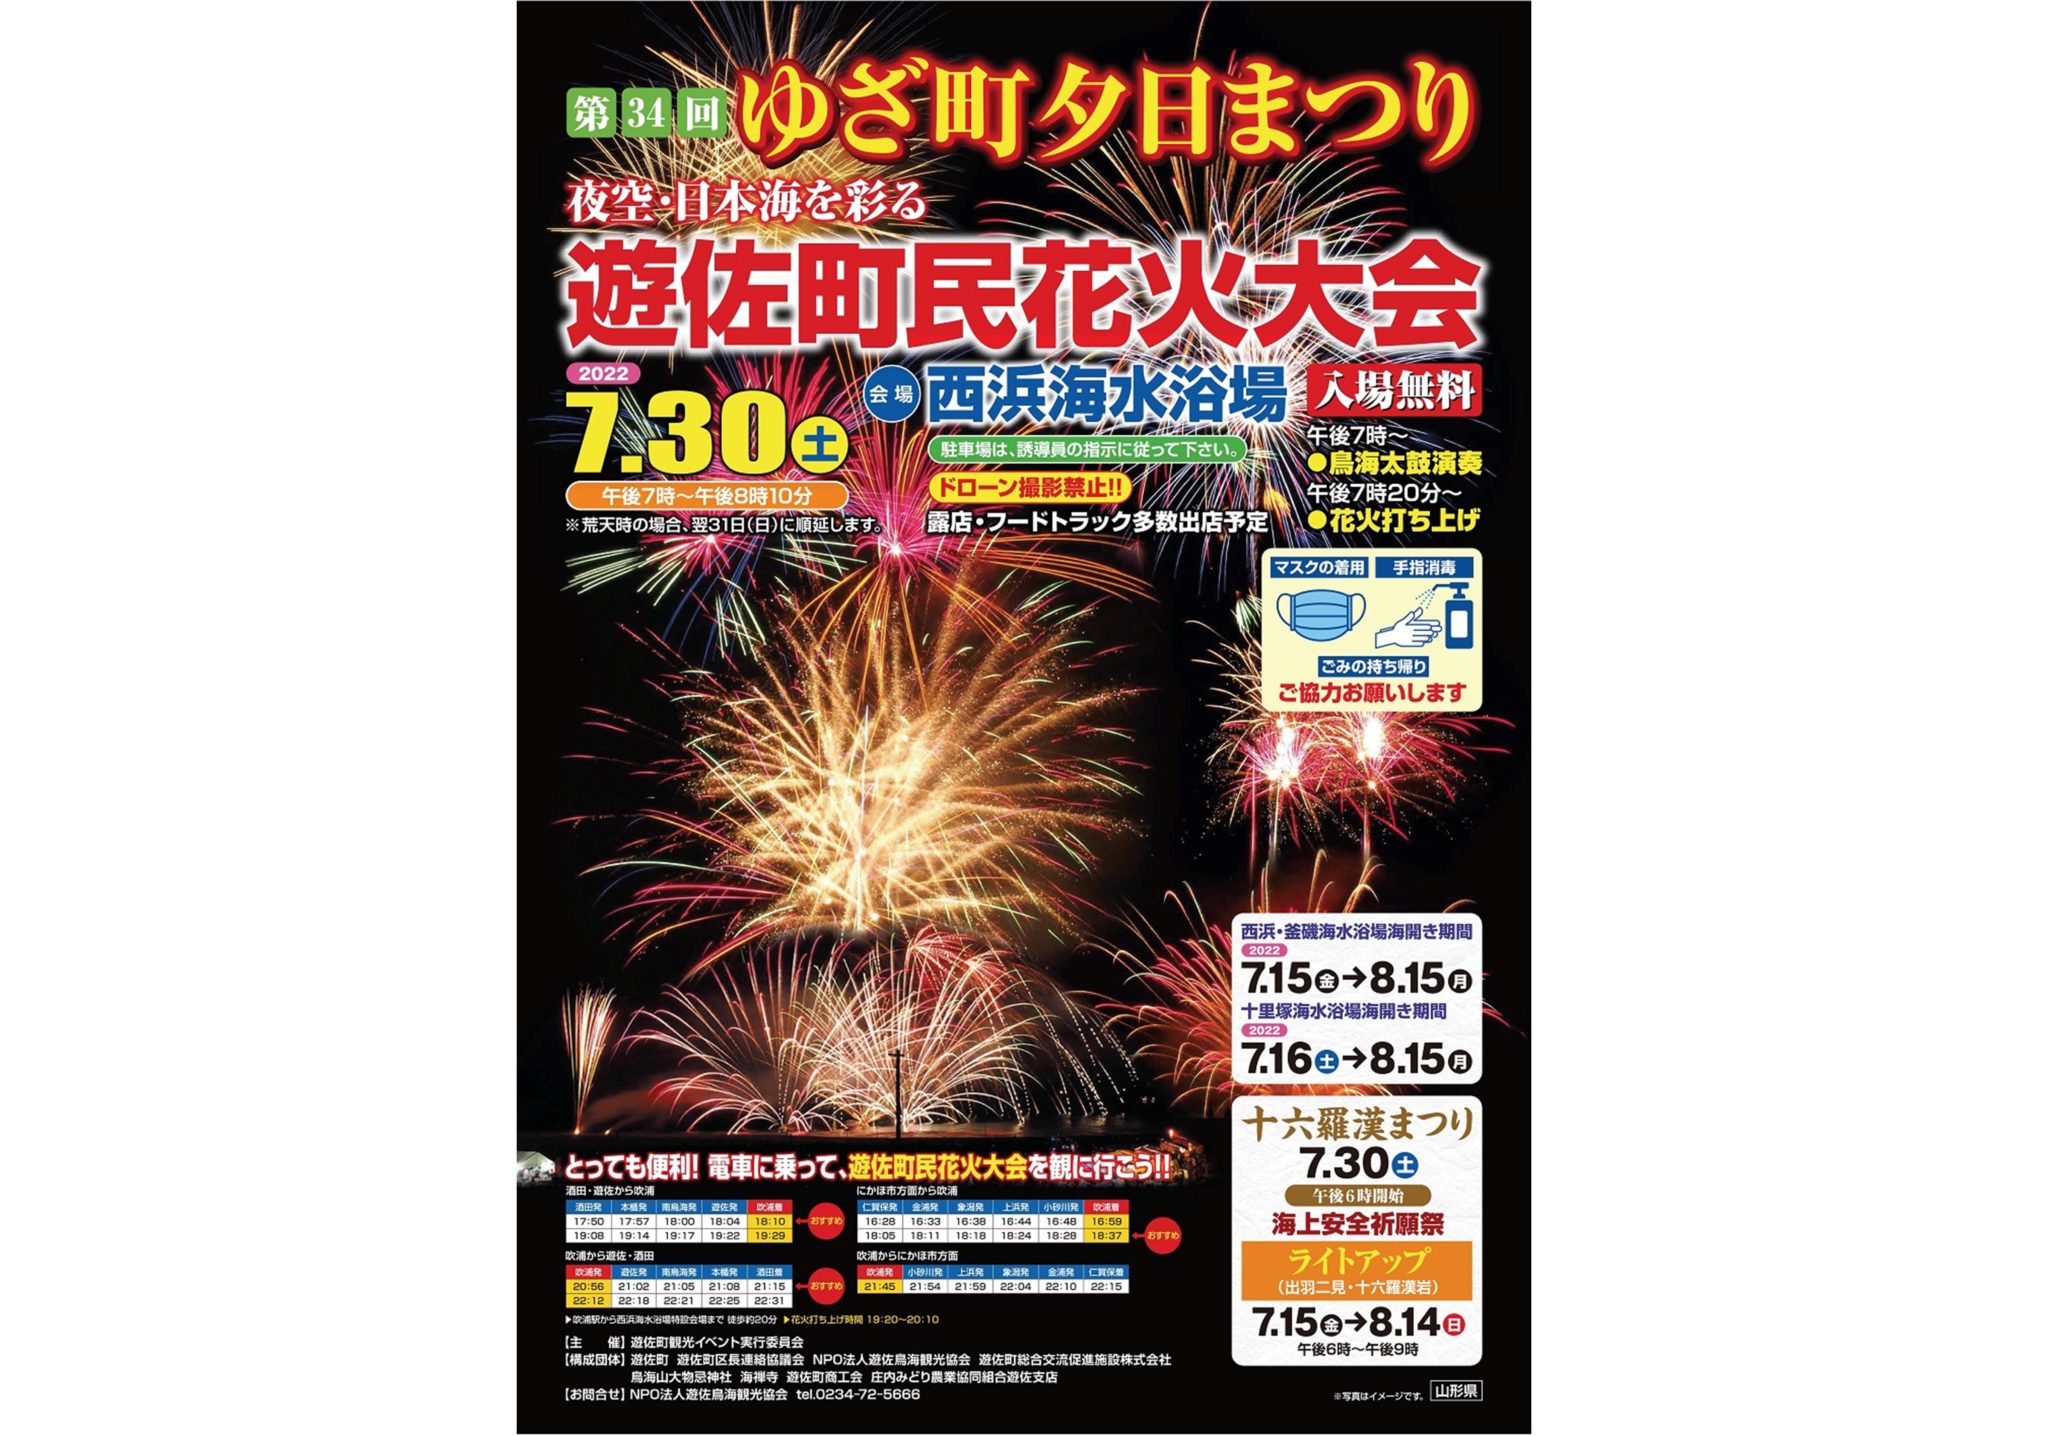 Yuza Town Sunset Festival & Fireworks